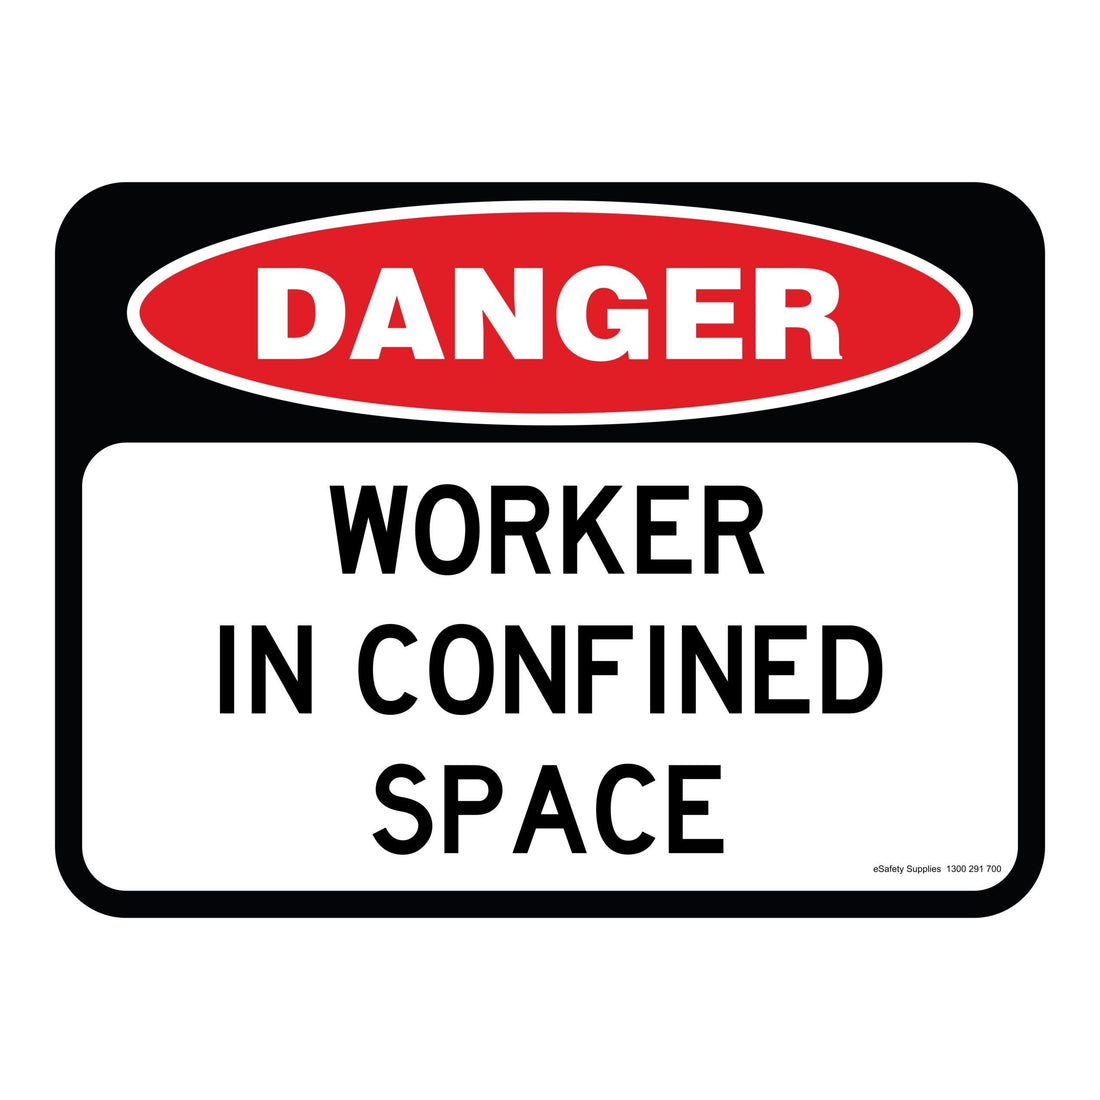 DANGER - WORKER IN CONFINED SPACE